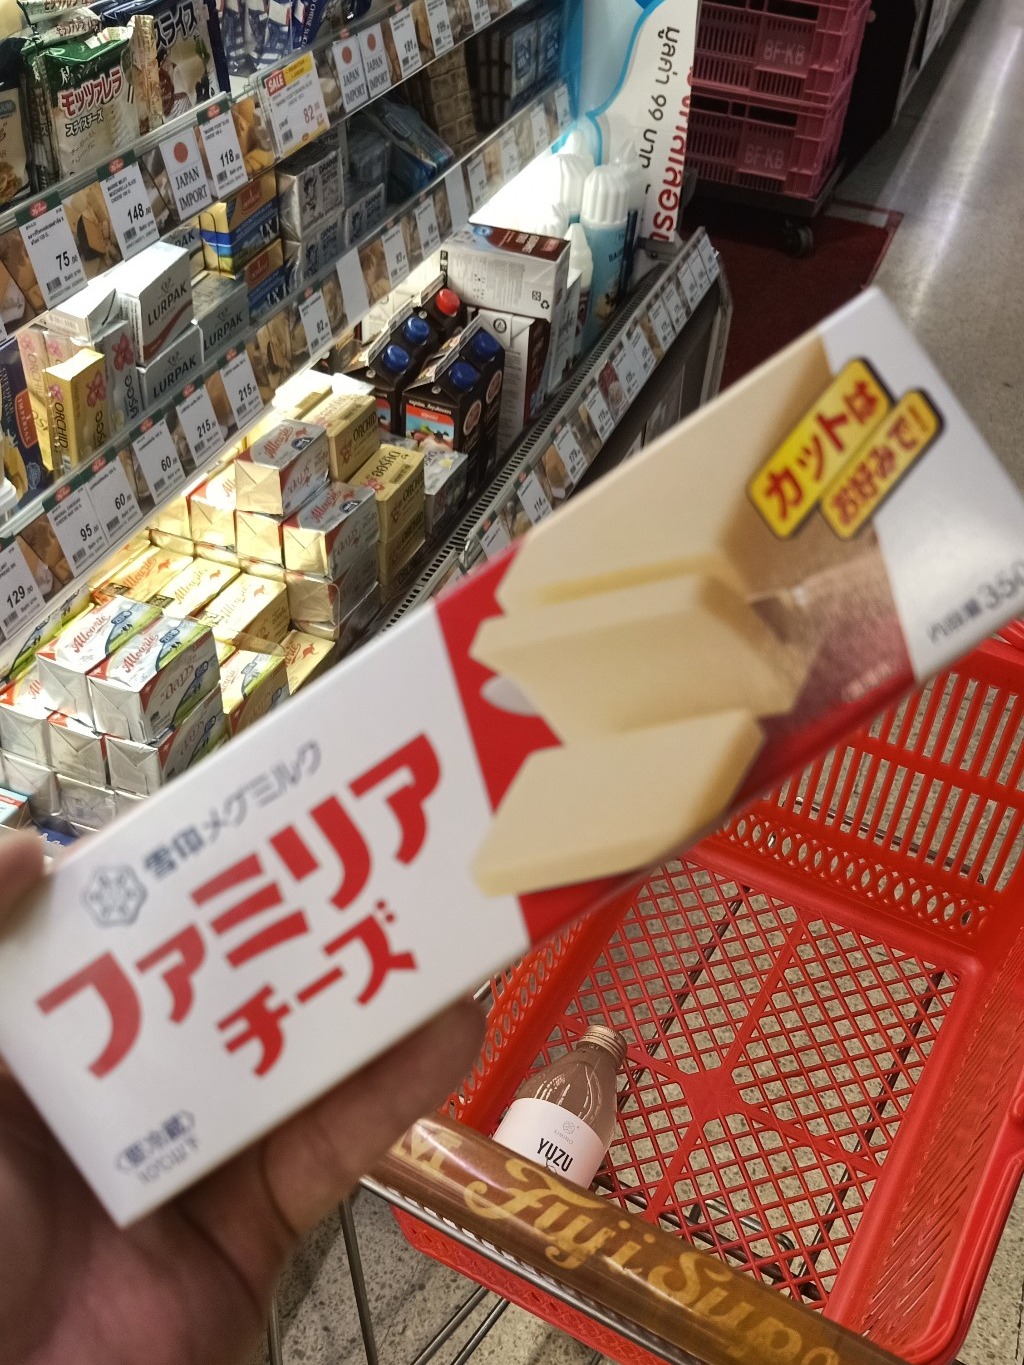 ecook ญี่ปุ่น ฟามิเลีย ชีส เนยแข็งชนิดโพรเซสชีส fuji snow familia cheese 350g